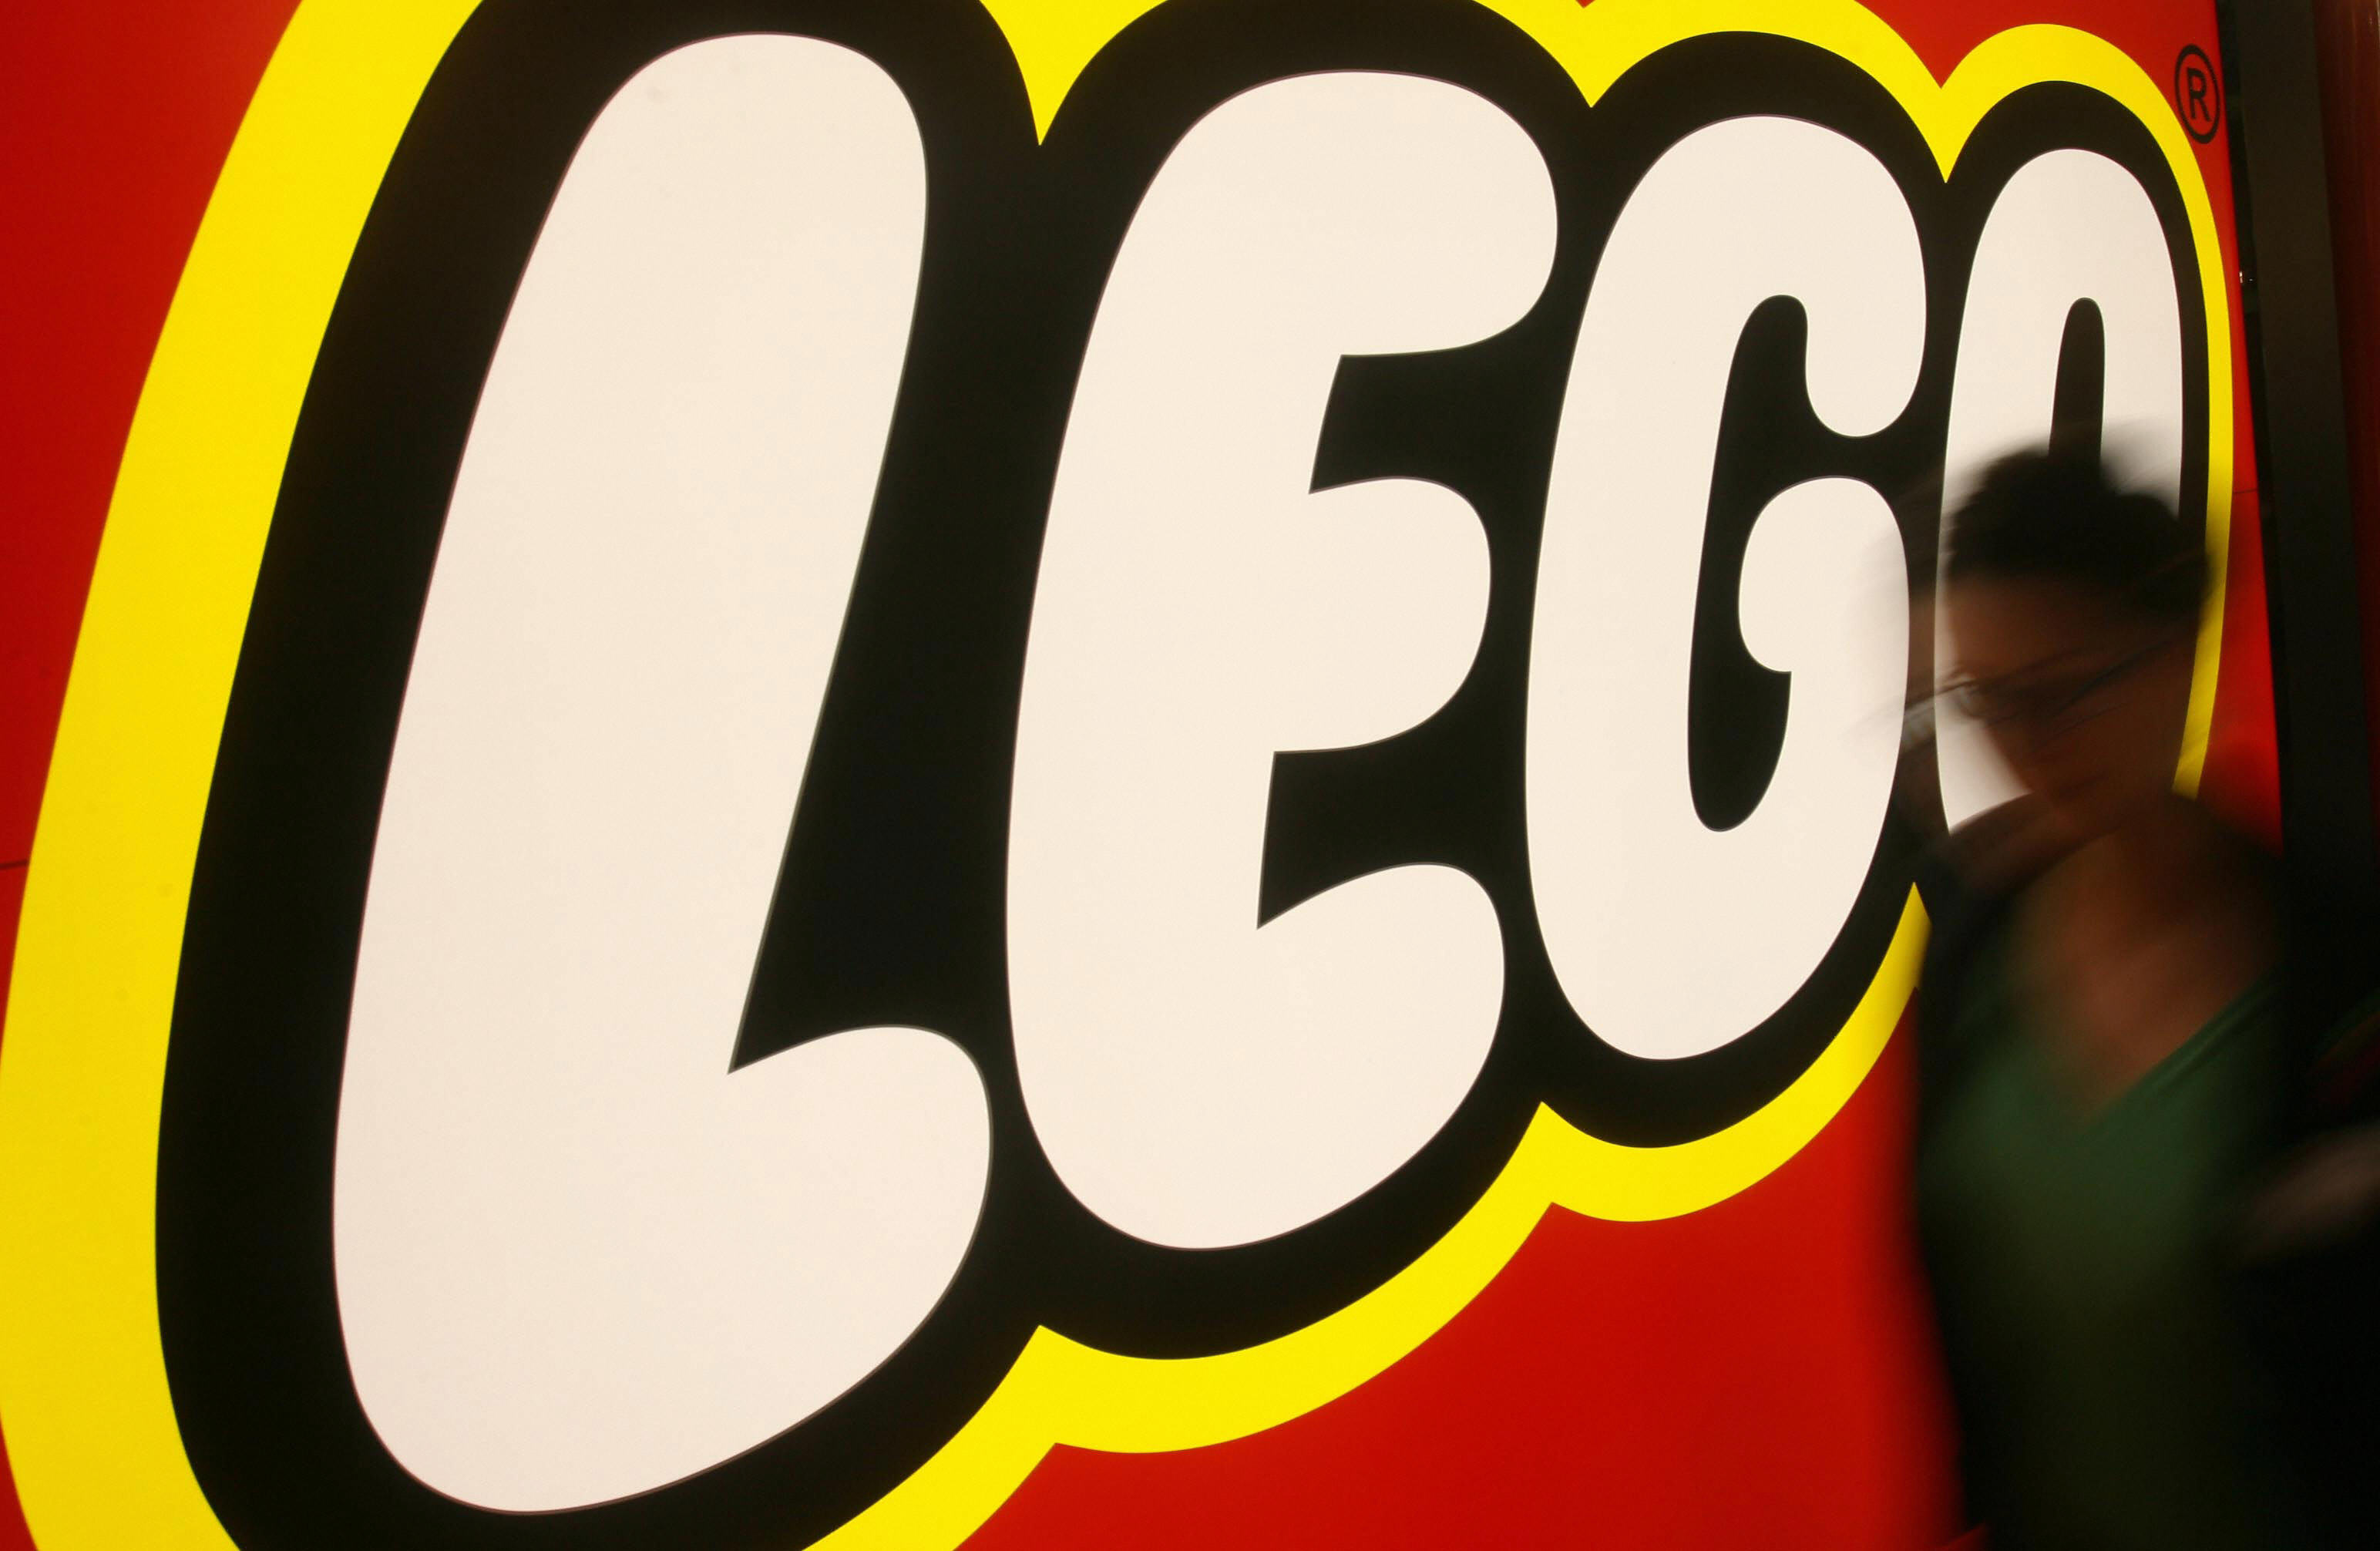 The LEGO logo 